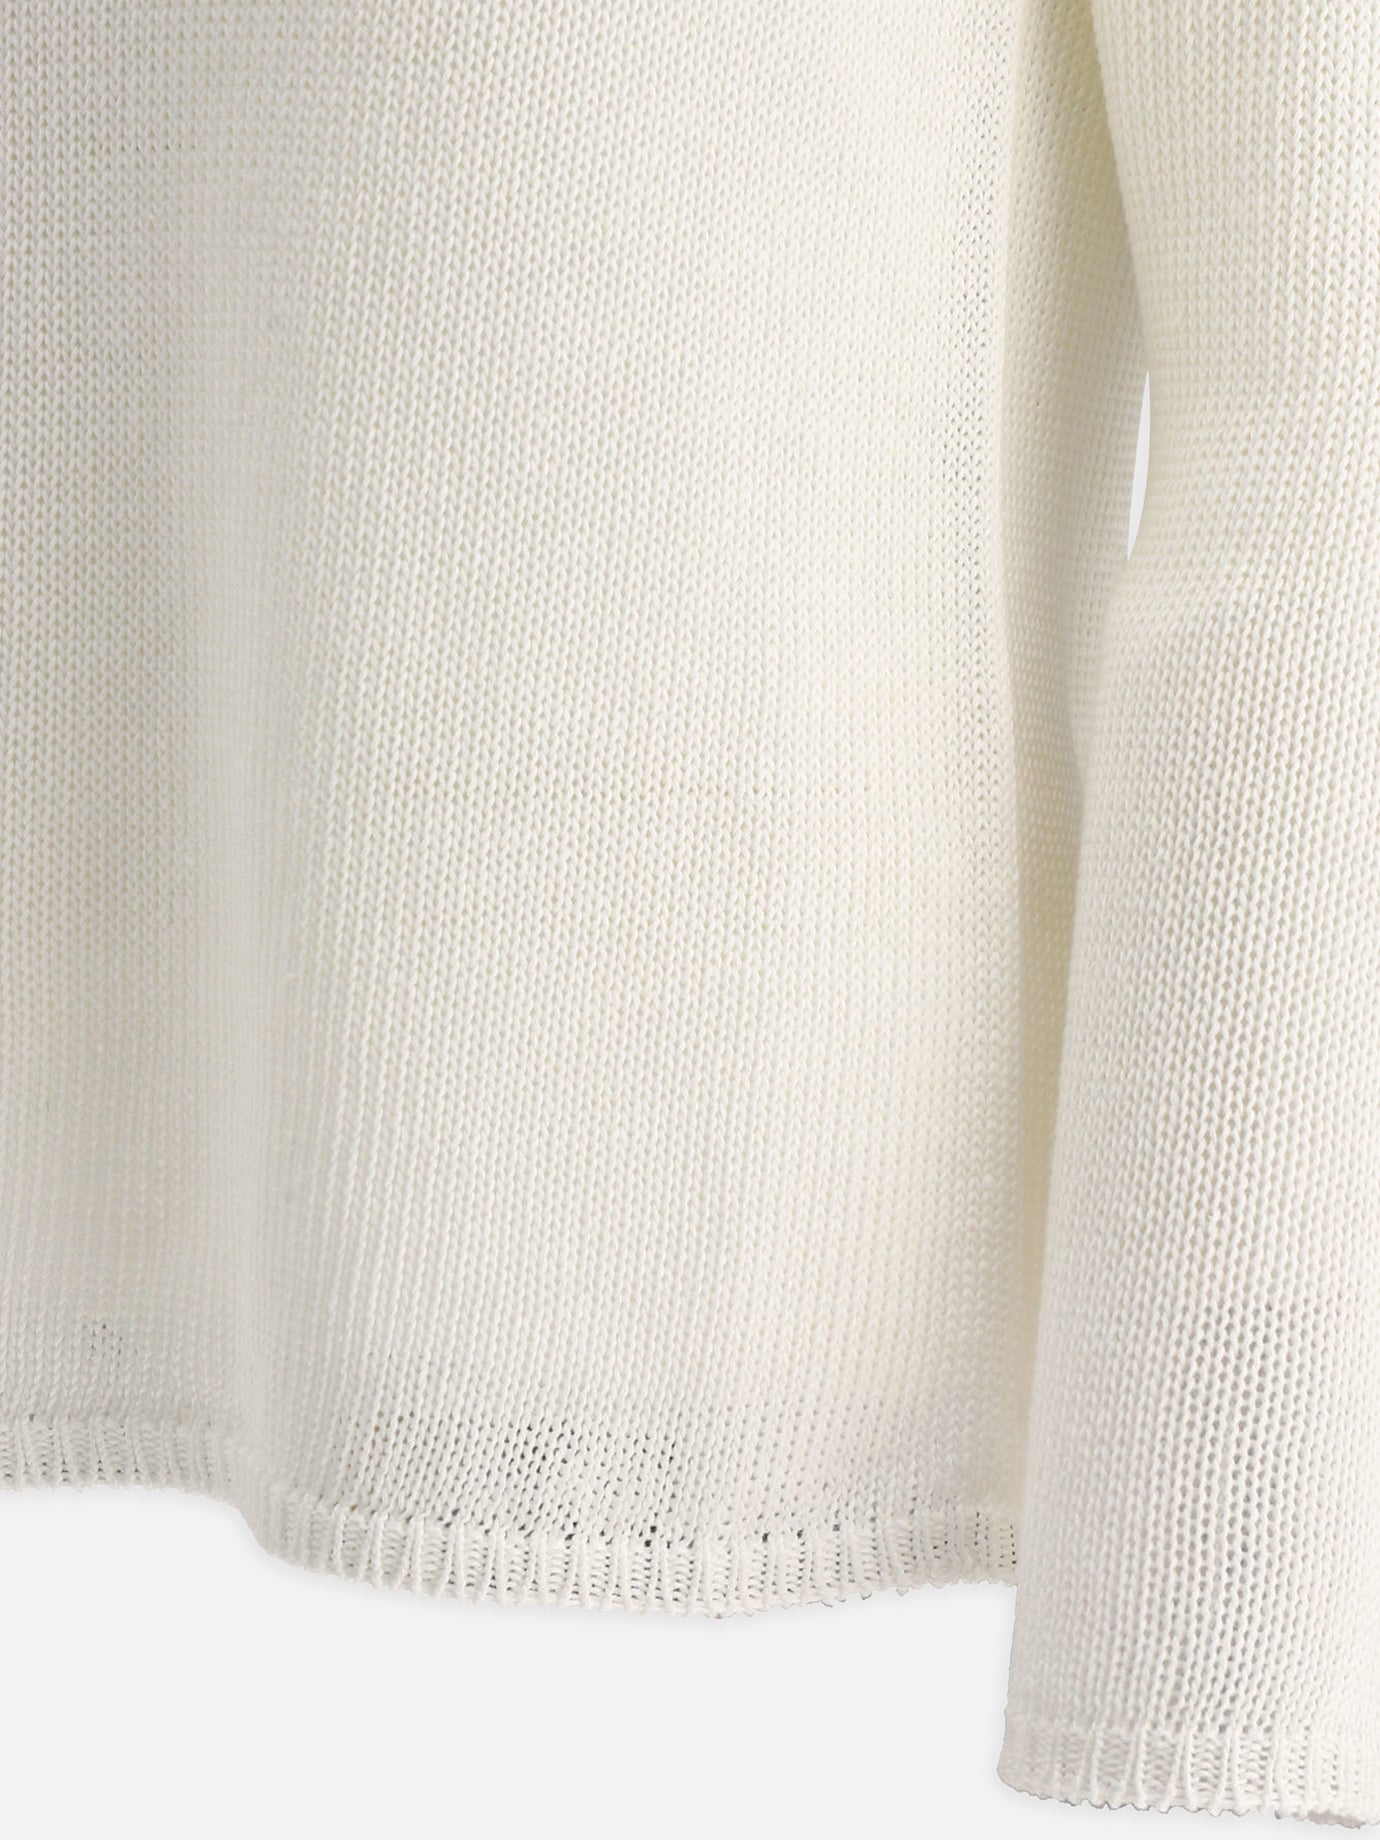 "Giolino" sweater